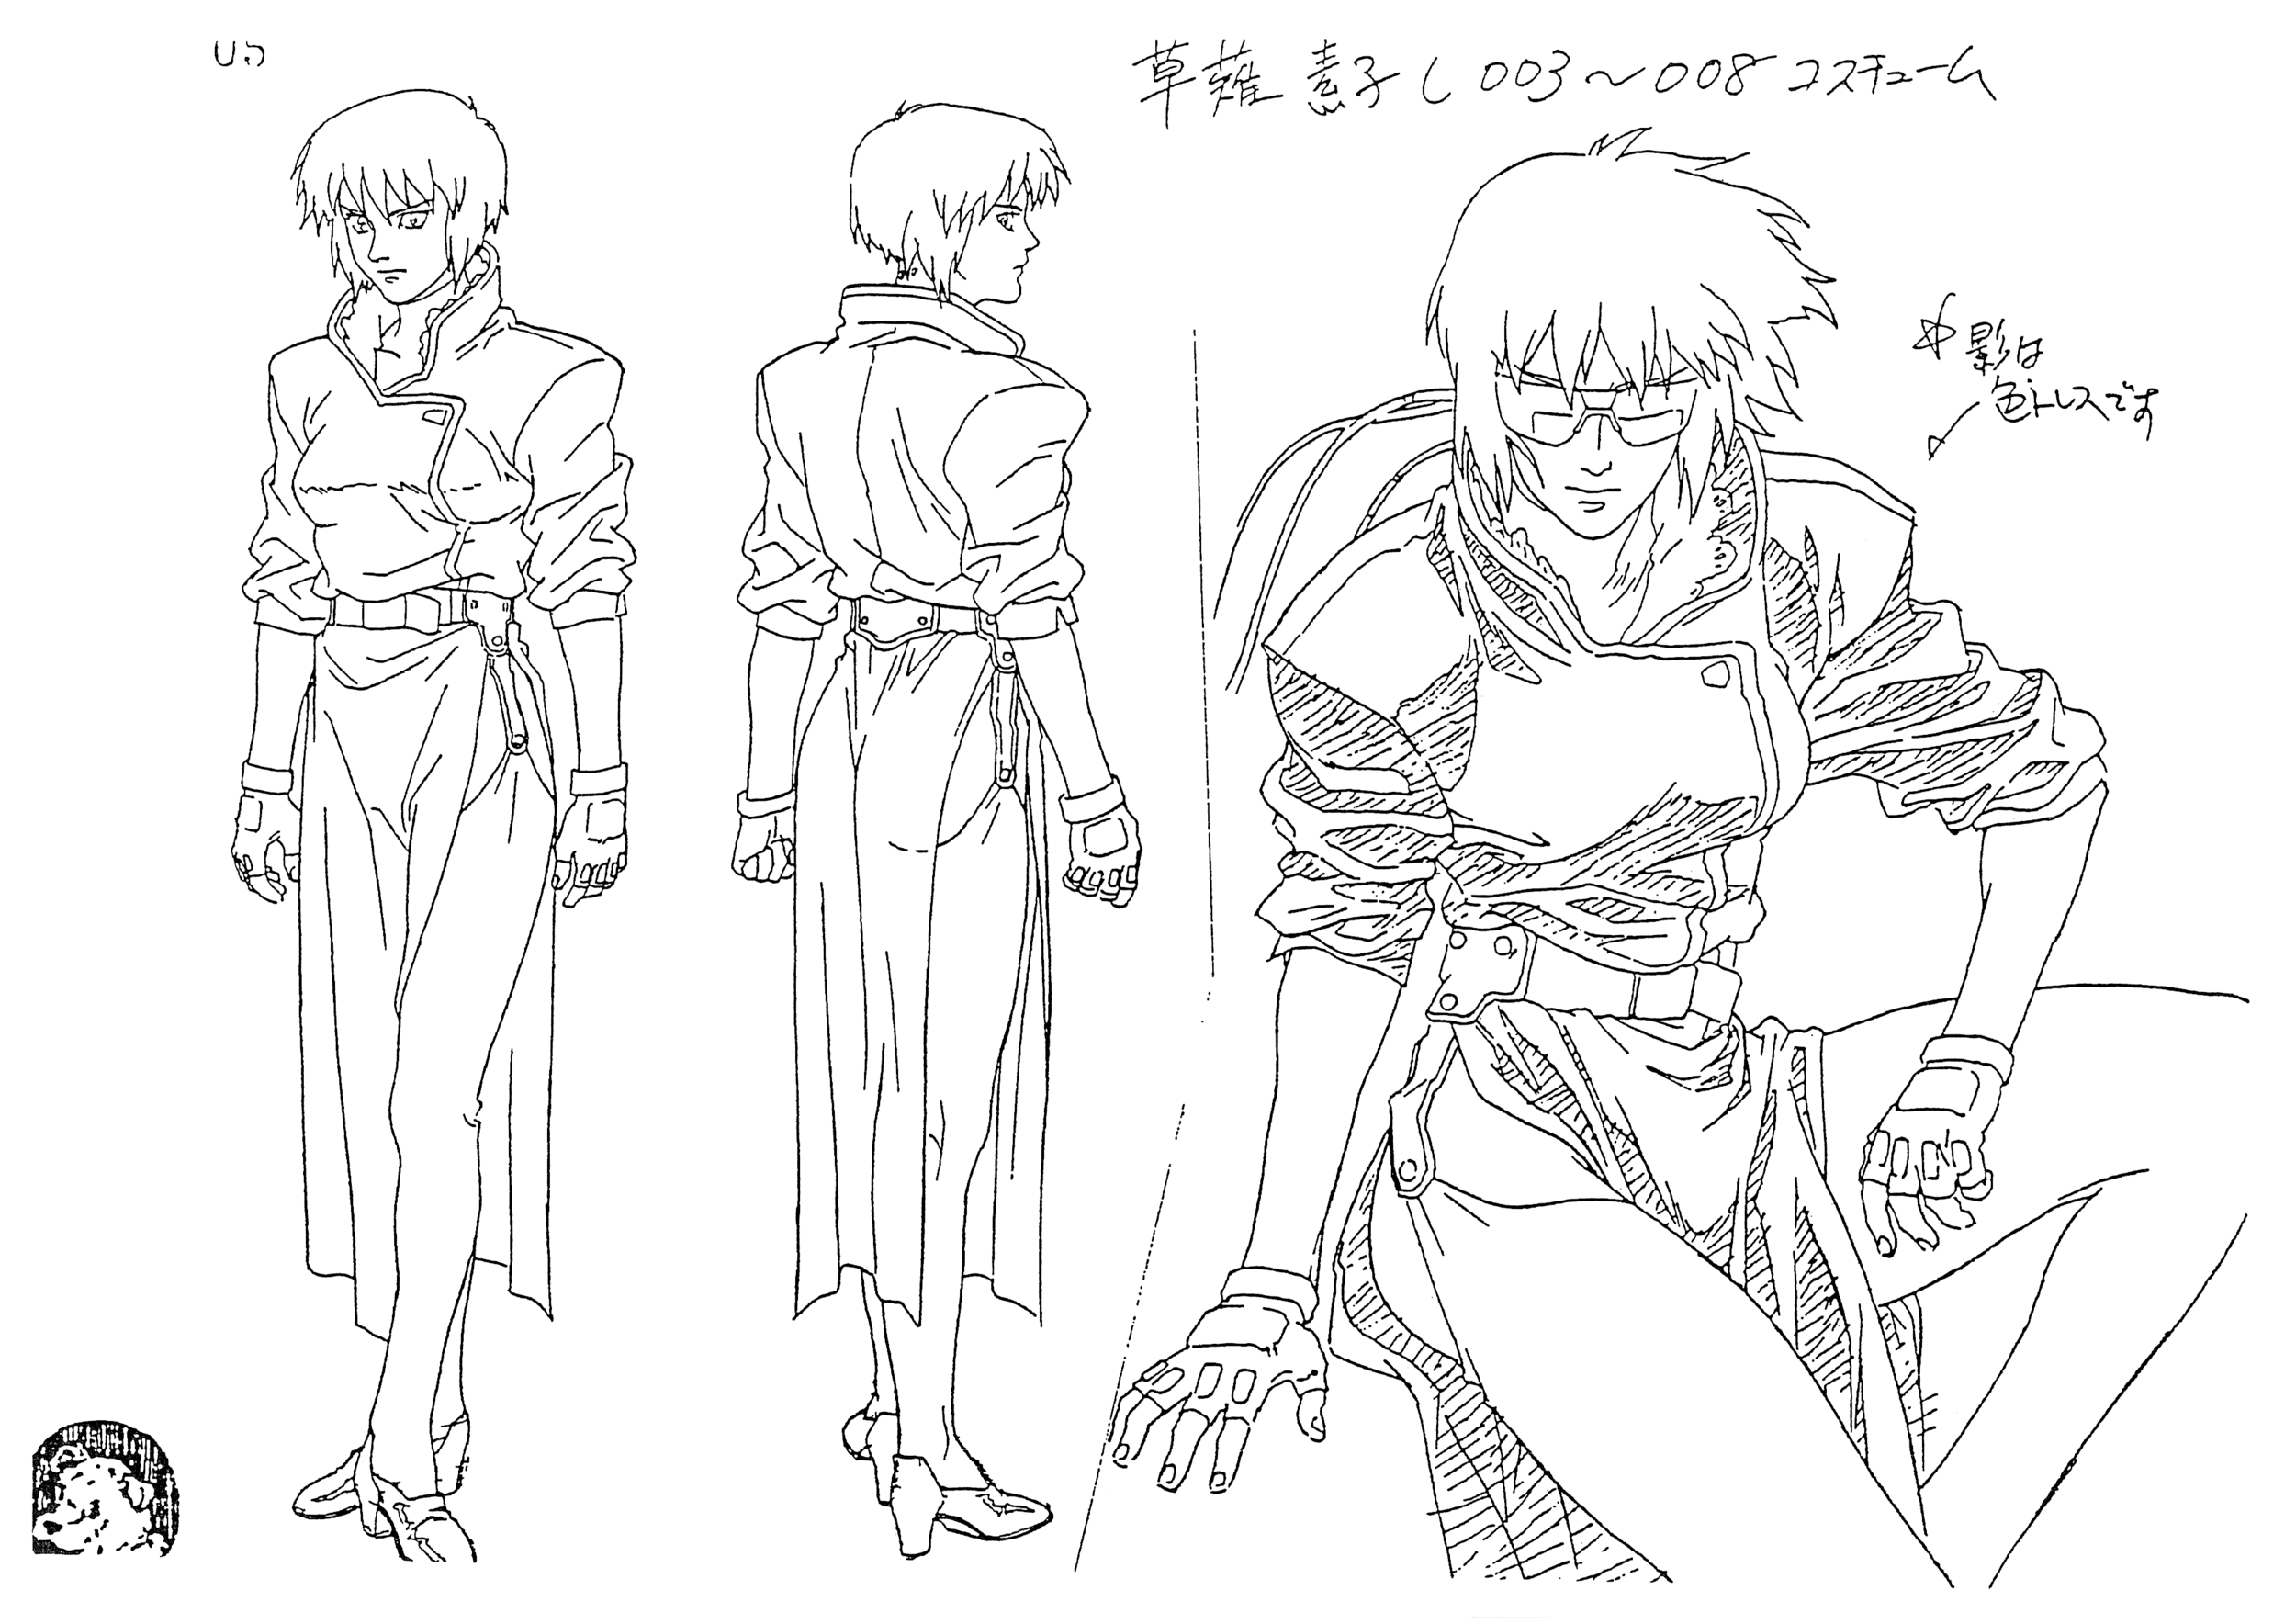 Figure 1. Production I.G. Character concept design of Major Motoko Kusanagi, made during pre-production. Digital image, Character Design References, February 2018.